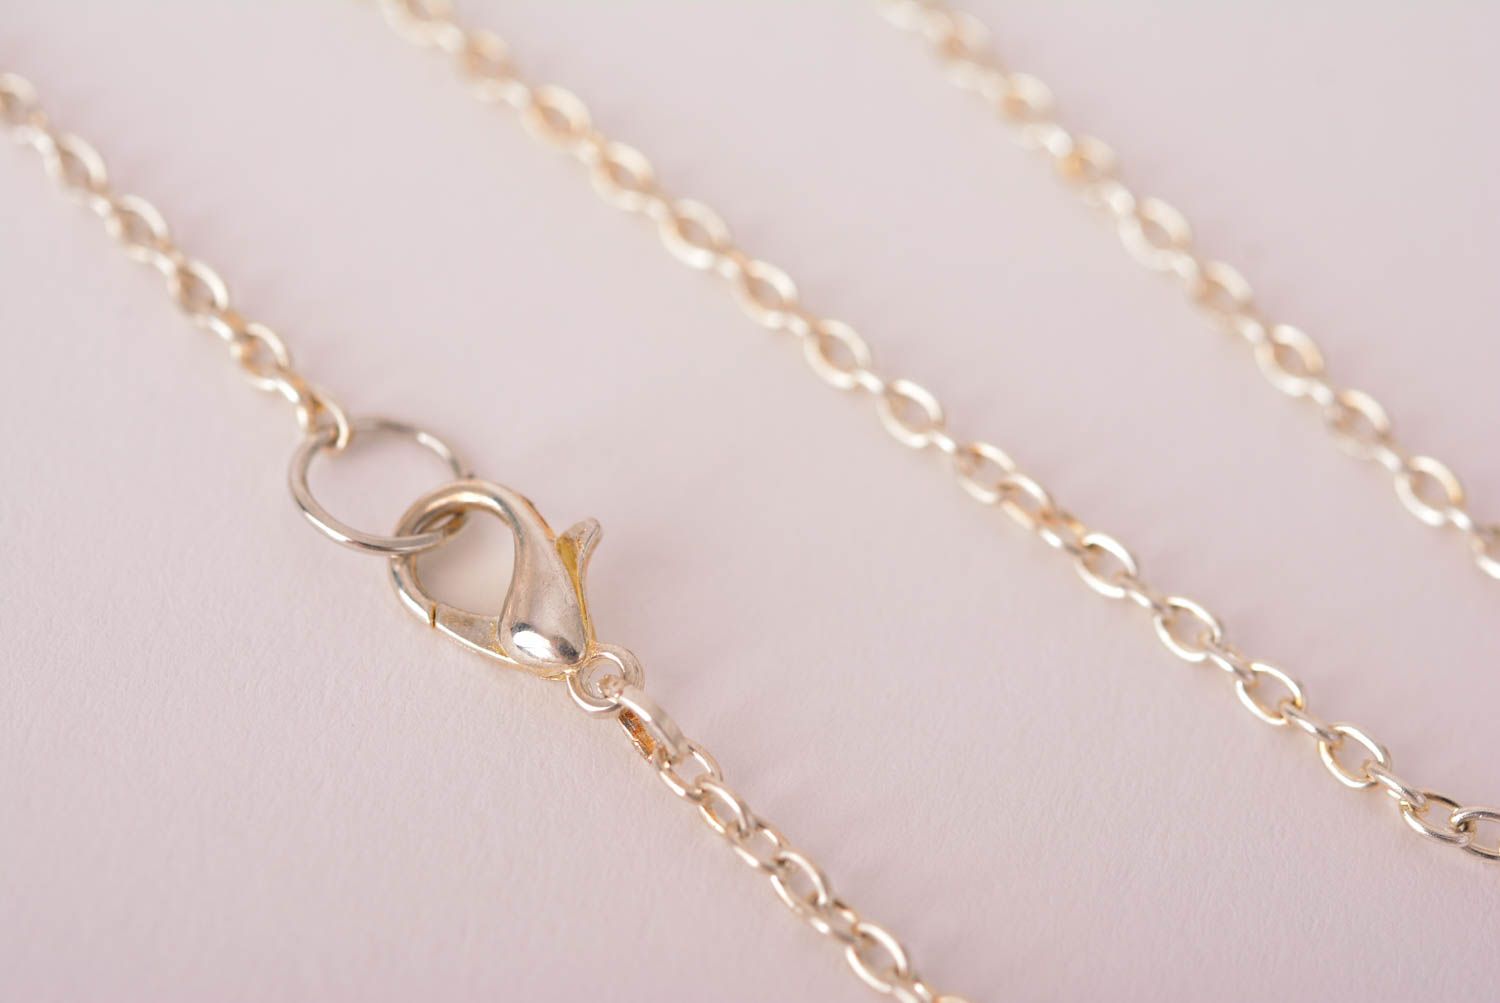 Handmade pendant unusual pendant for women epoxy resin jewelry gift ideas photo 5